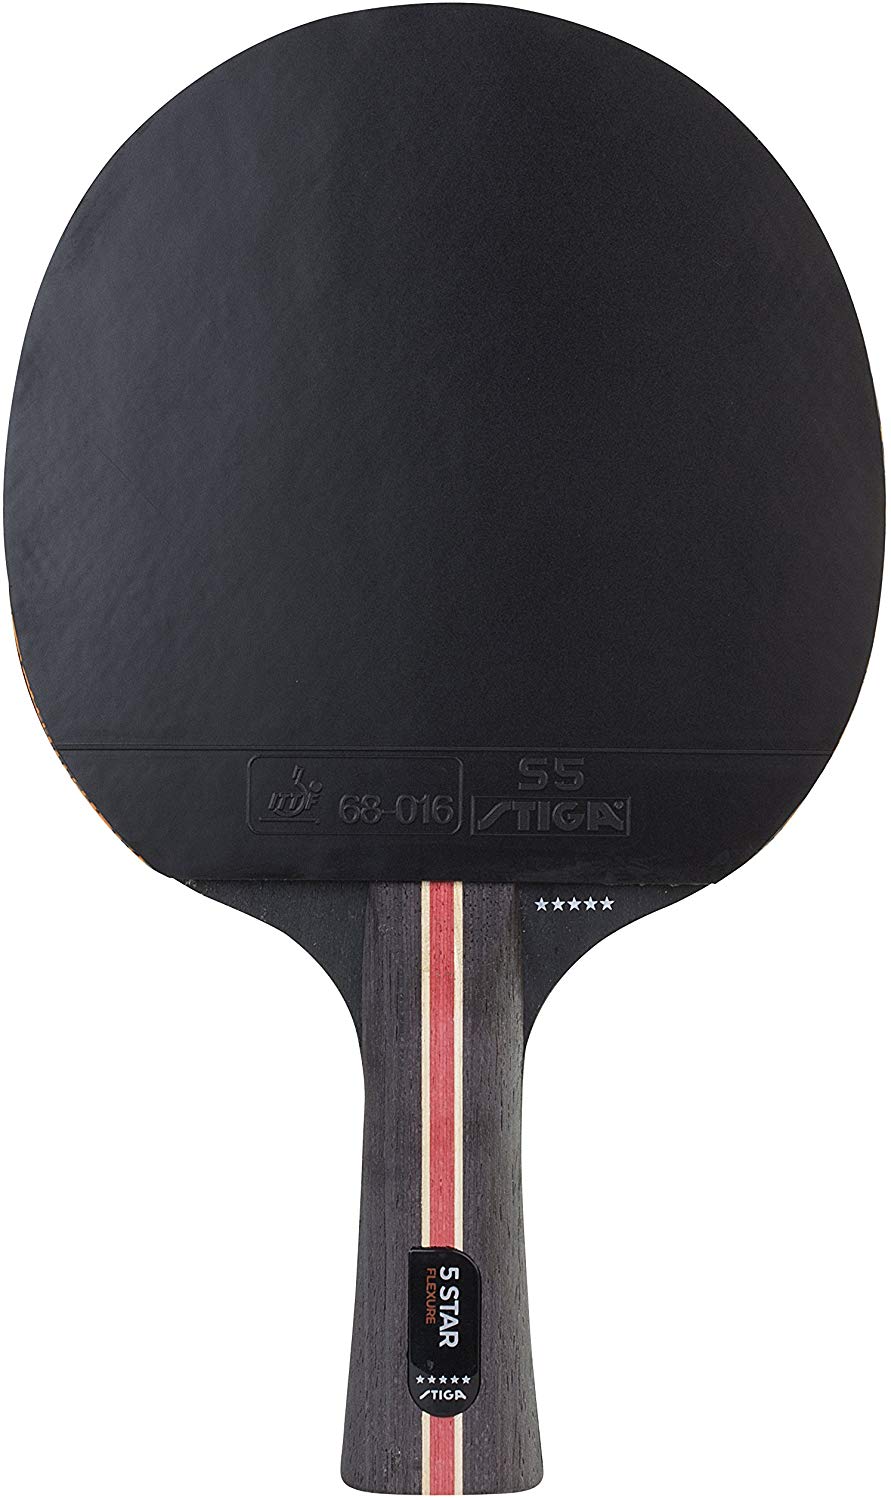 Stiga Flexure 5 Star Table Tennis Pad - image 3 of 4